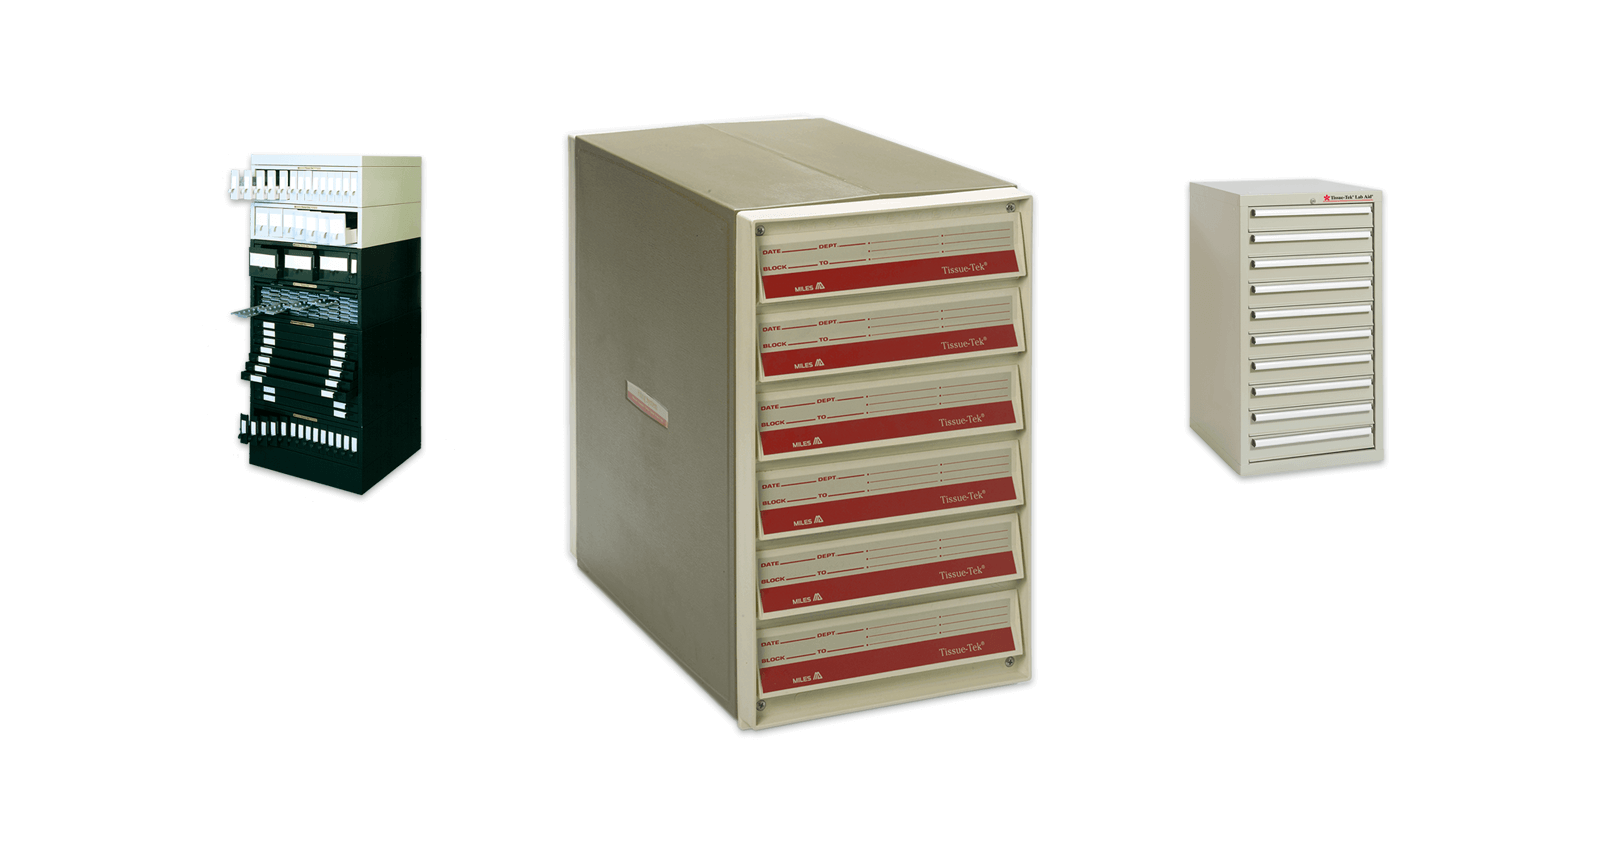 Archiving-Uni-Cassette-Filing-Cabinets-Sakura-Finetek.png